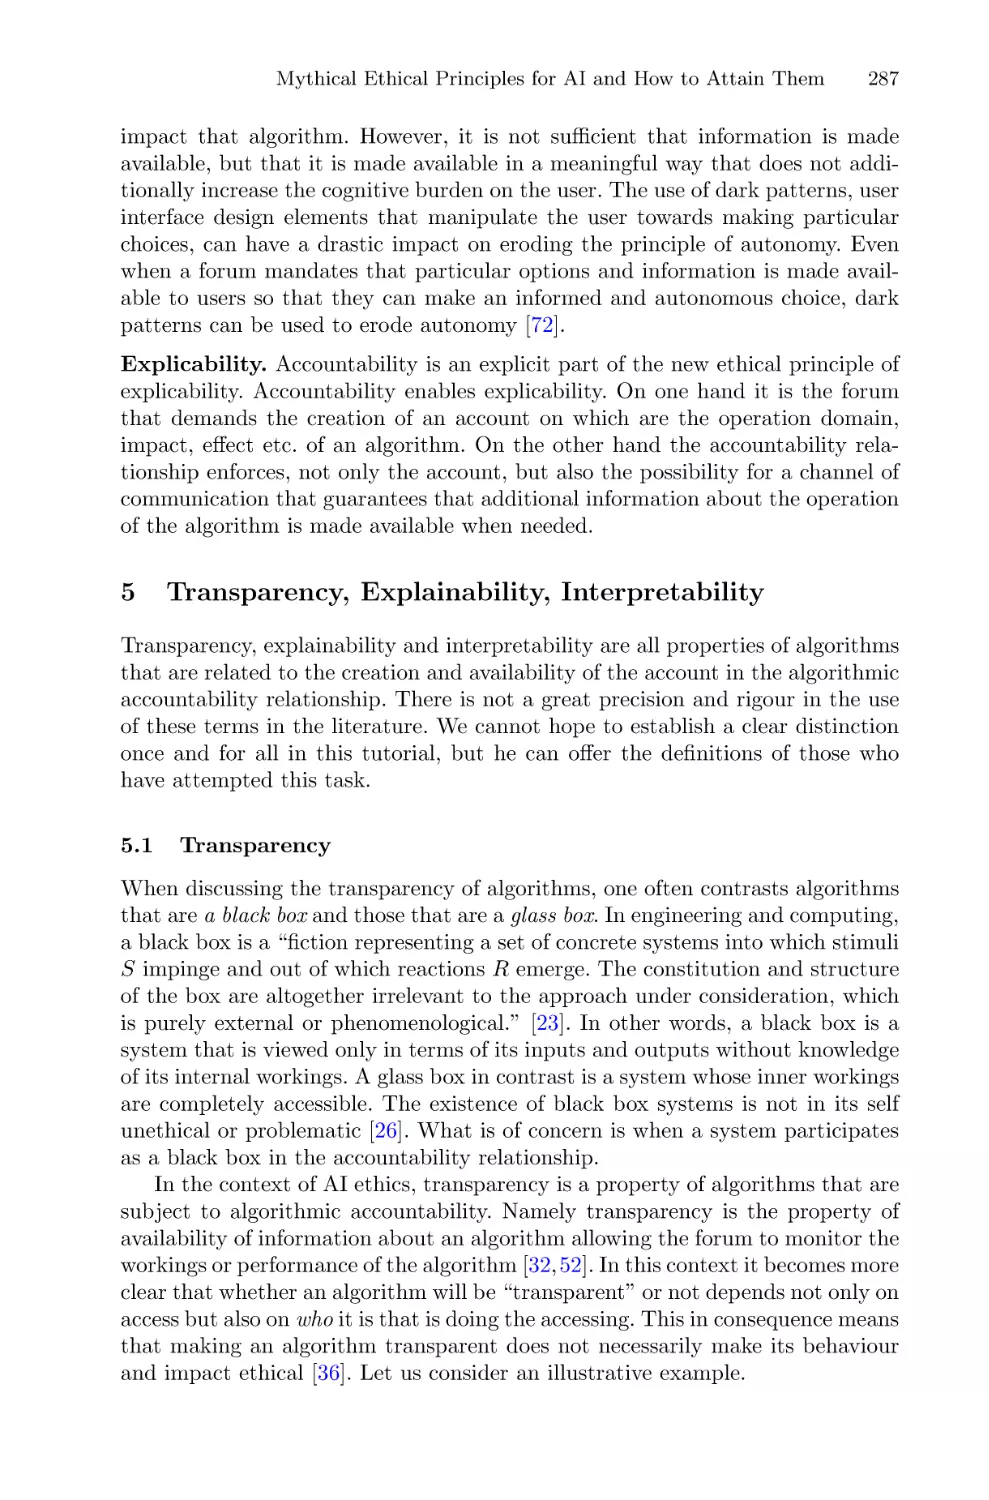 5 Transparency, Explainability, Interpretability
5.1 Transparency